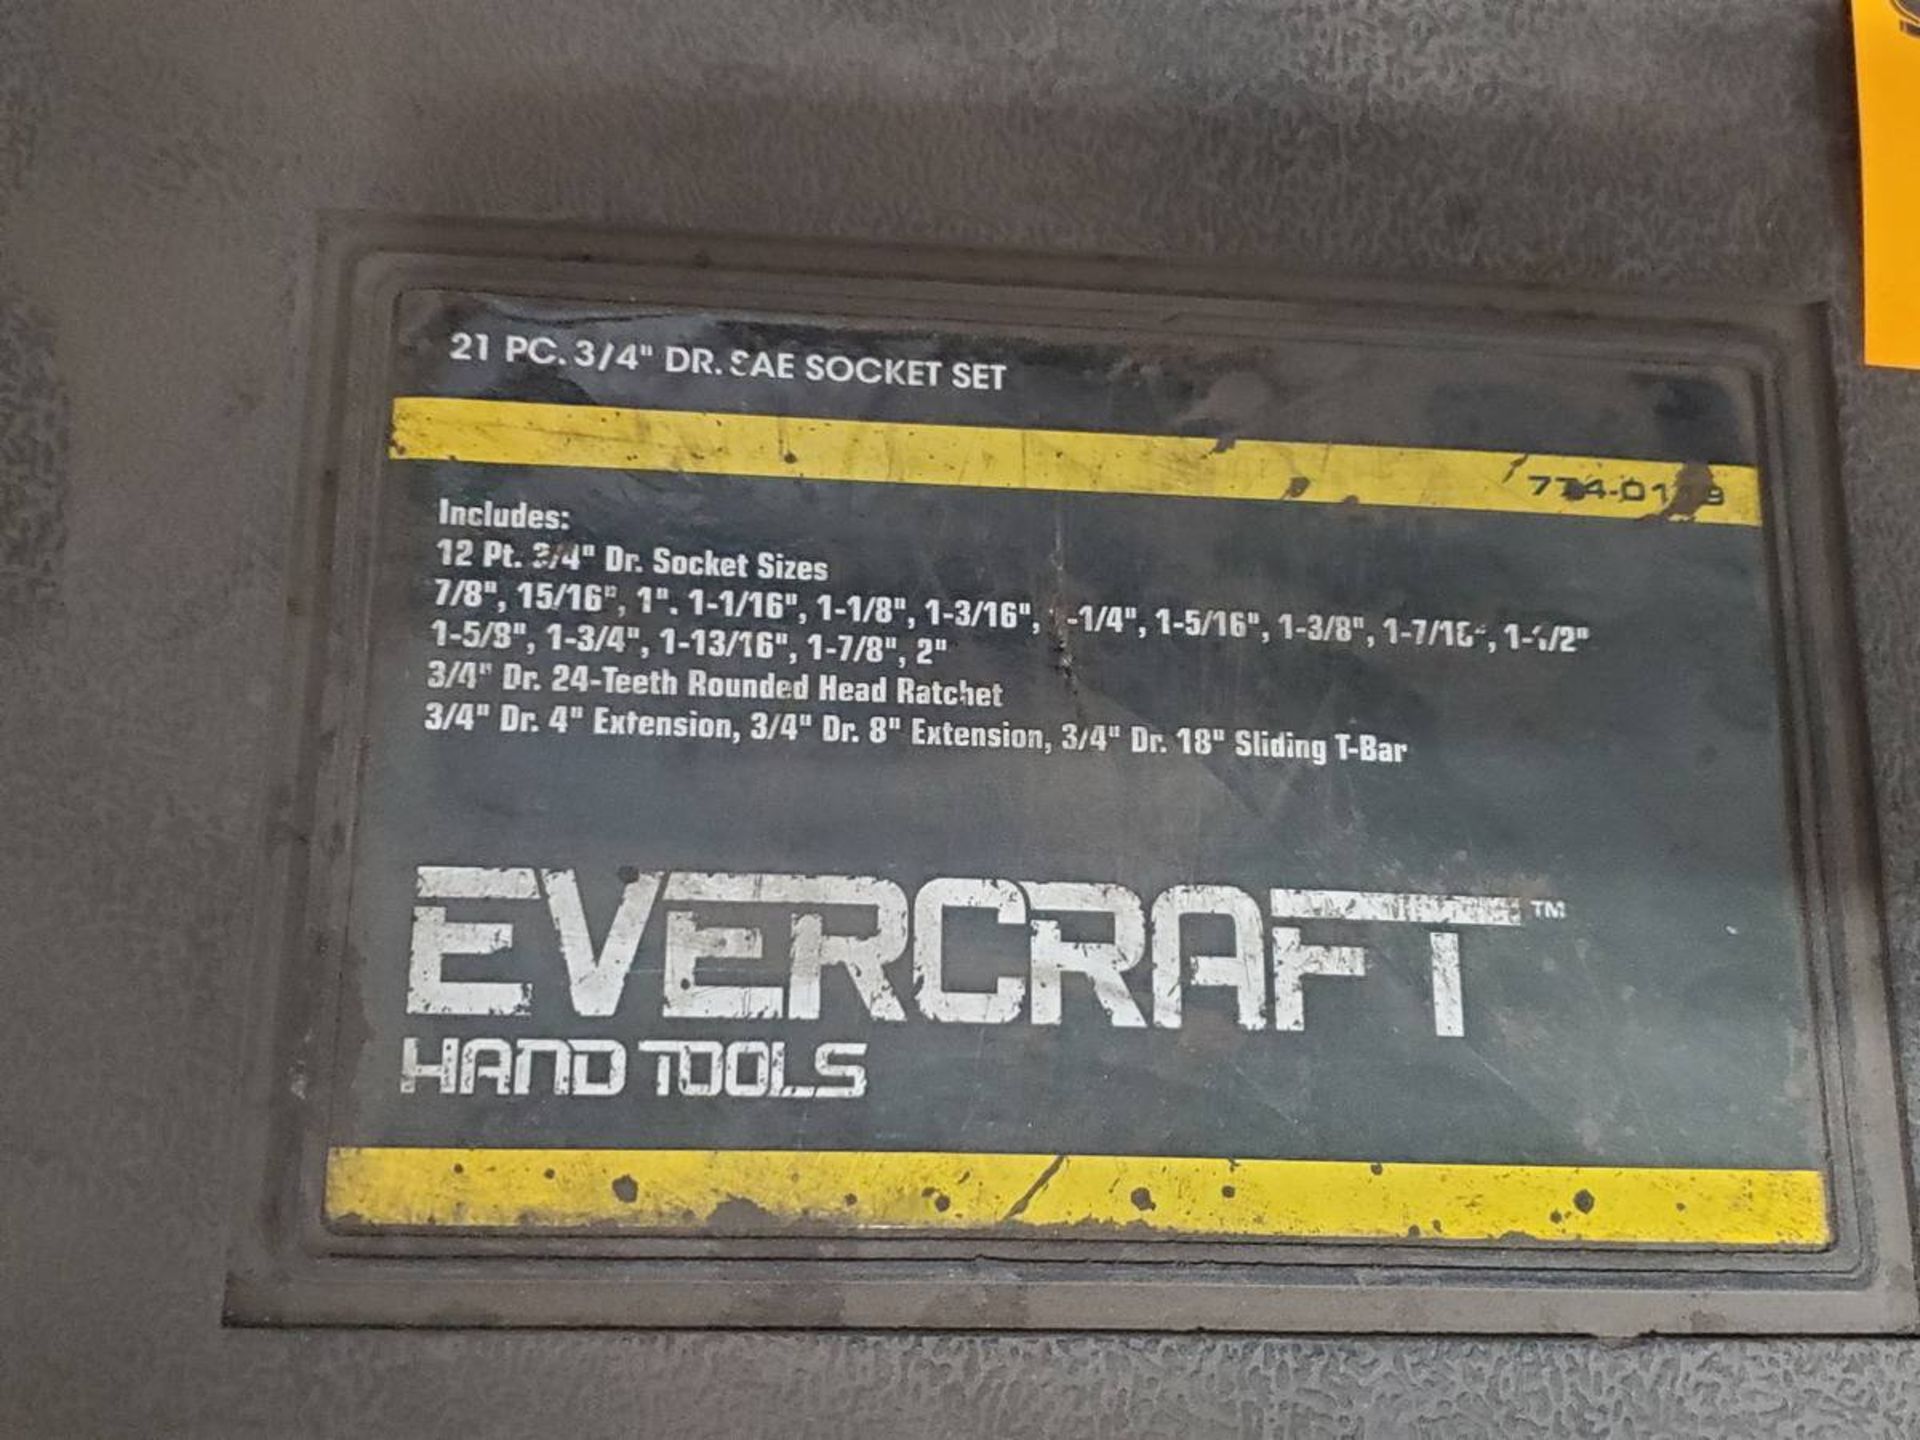 Evercraft 21PC 3/4" Drive Socket Set - Image 2 of 2